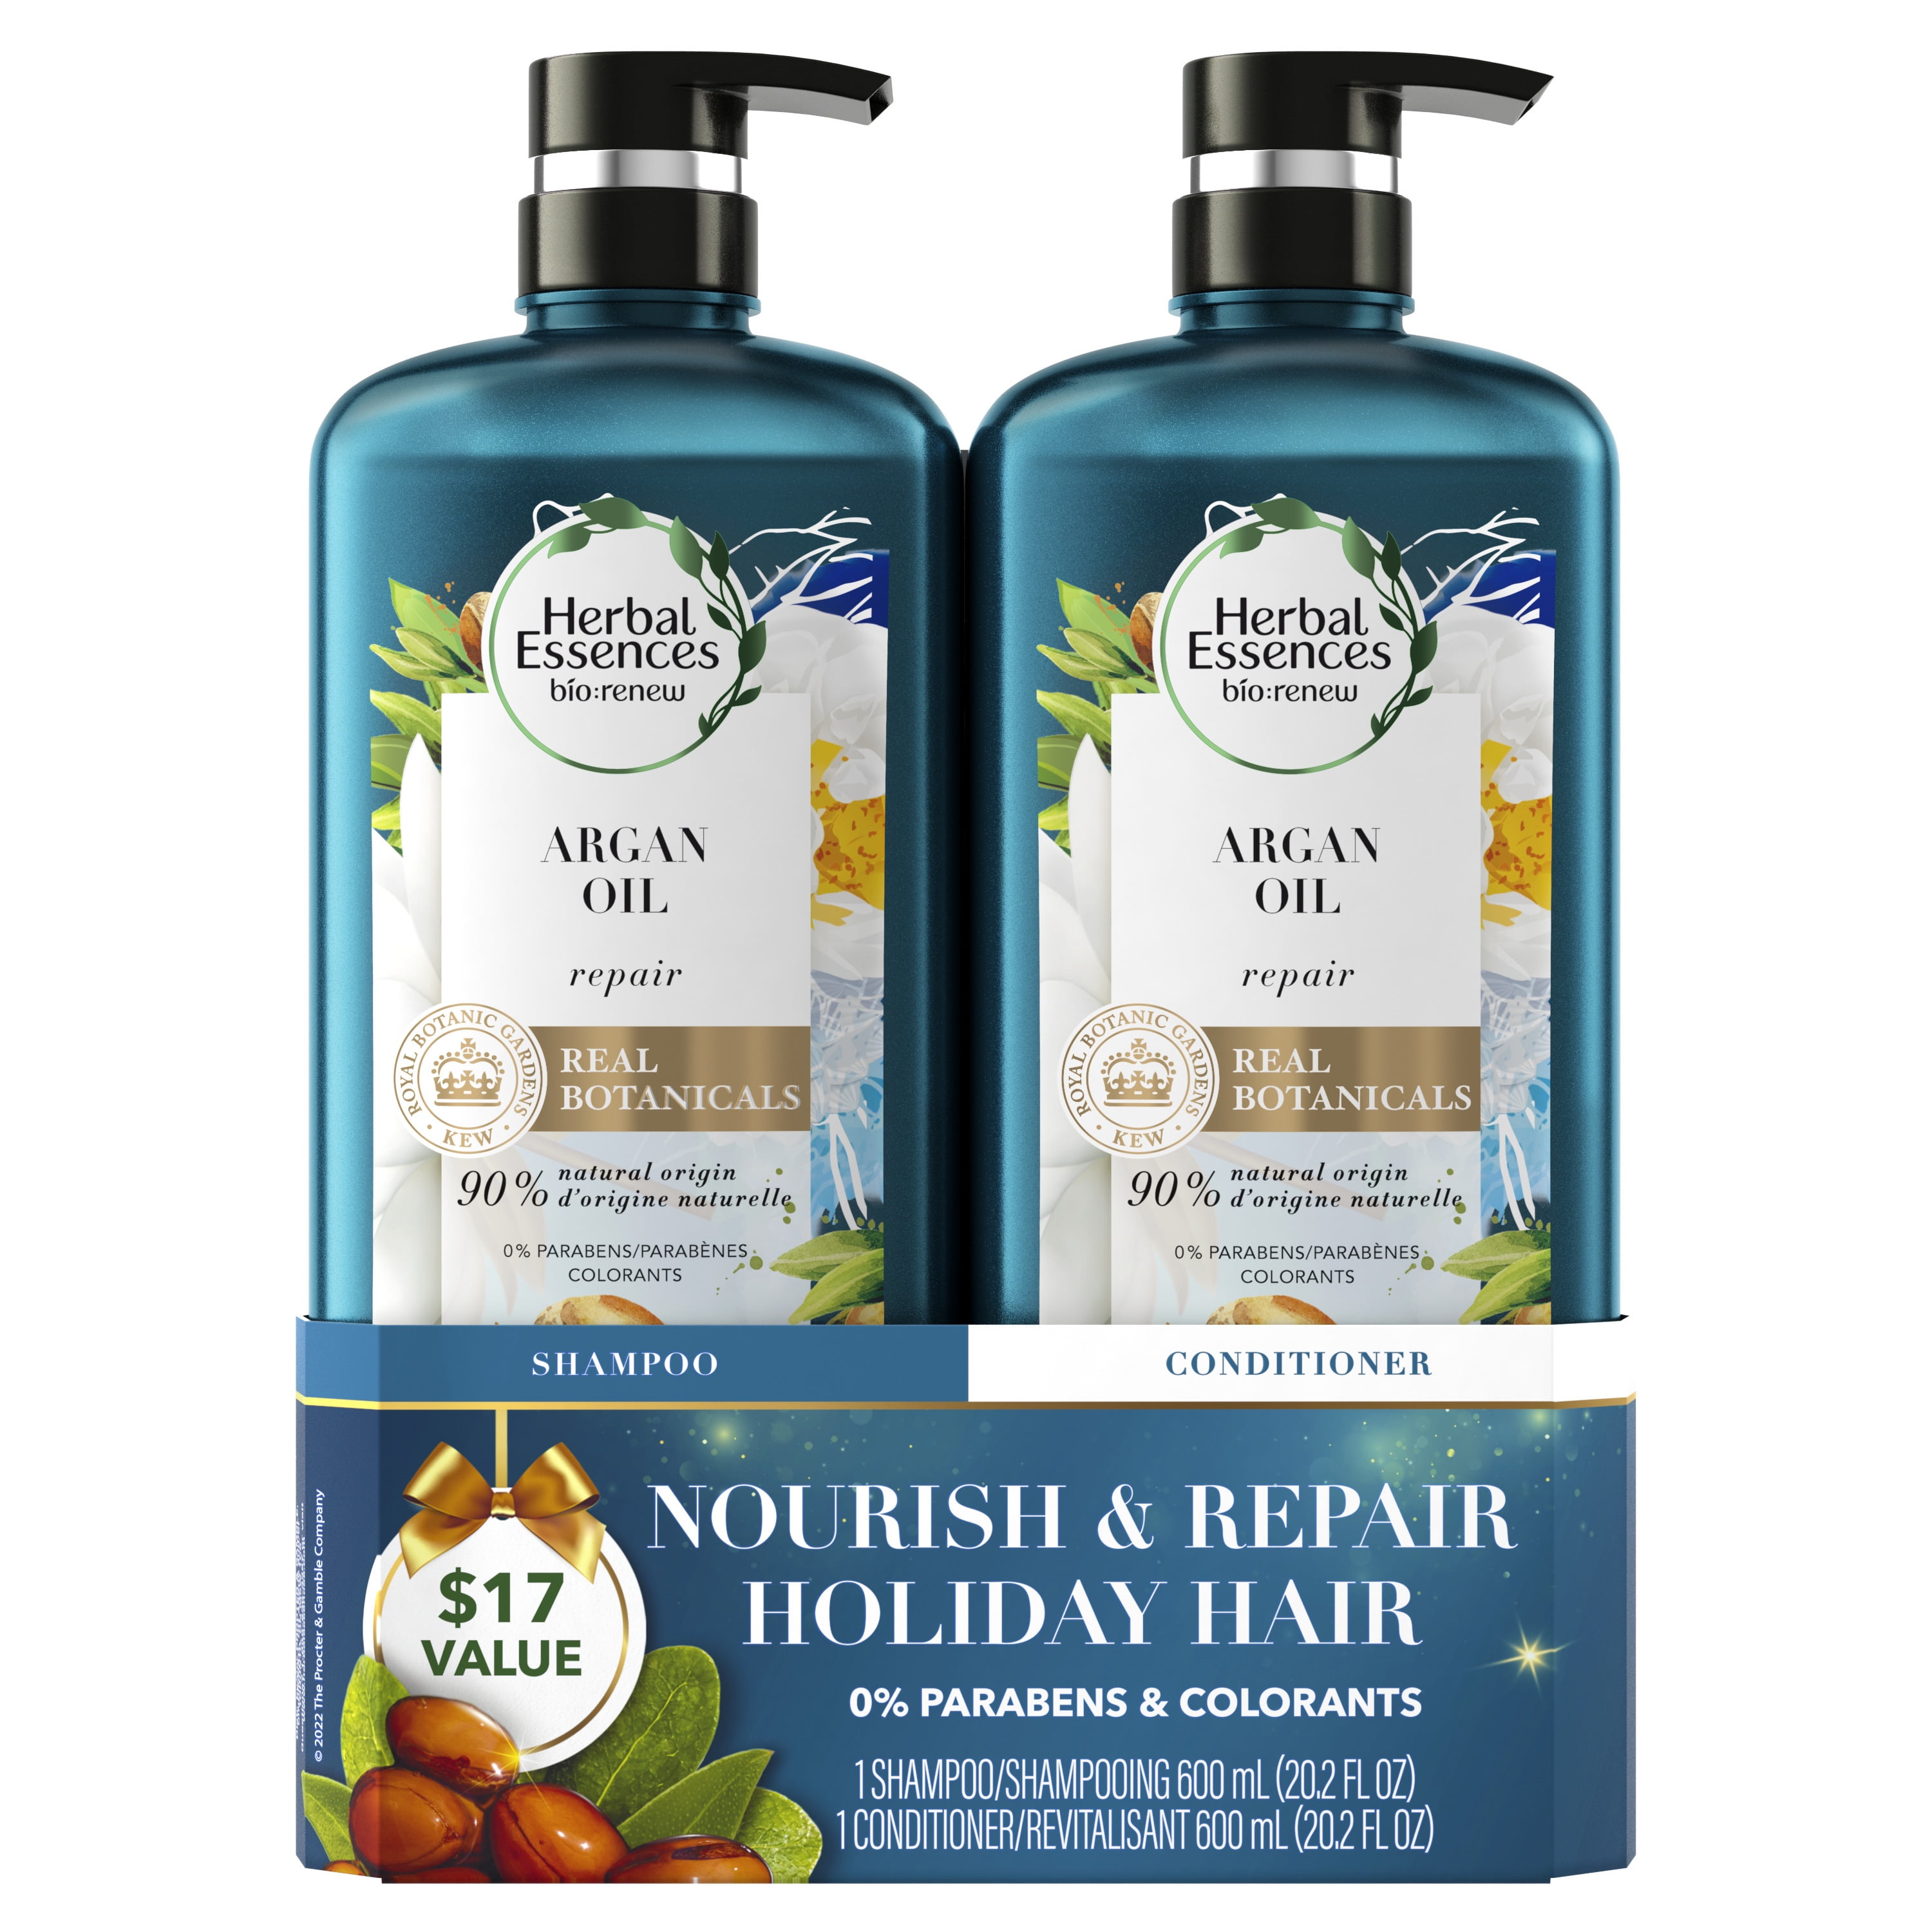 ($19 VALUE) Herbal Essences bio:renew Argan Oil Repairing Color-Safe Shampoo and Conditioner, 40.4 fl oz